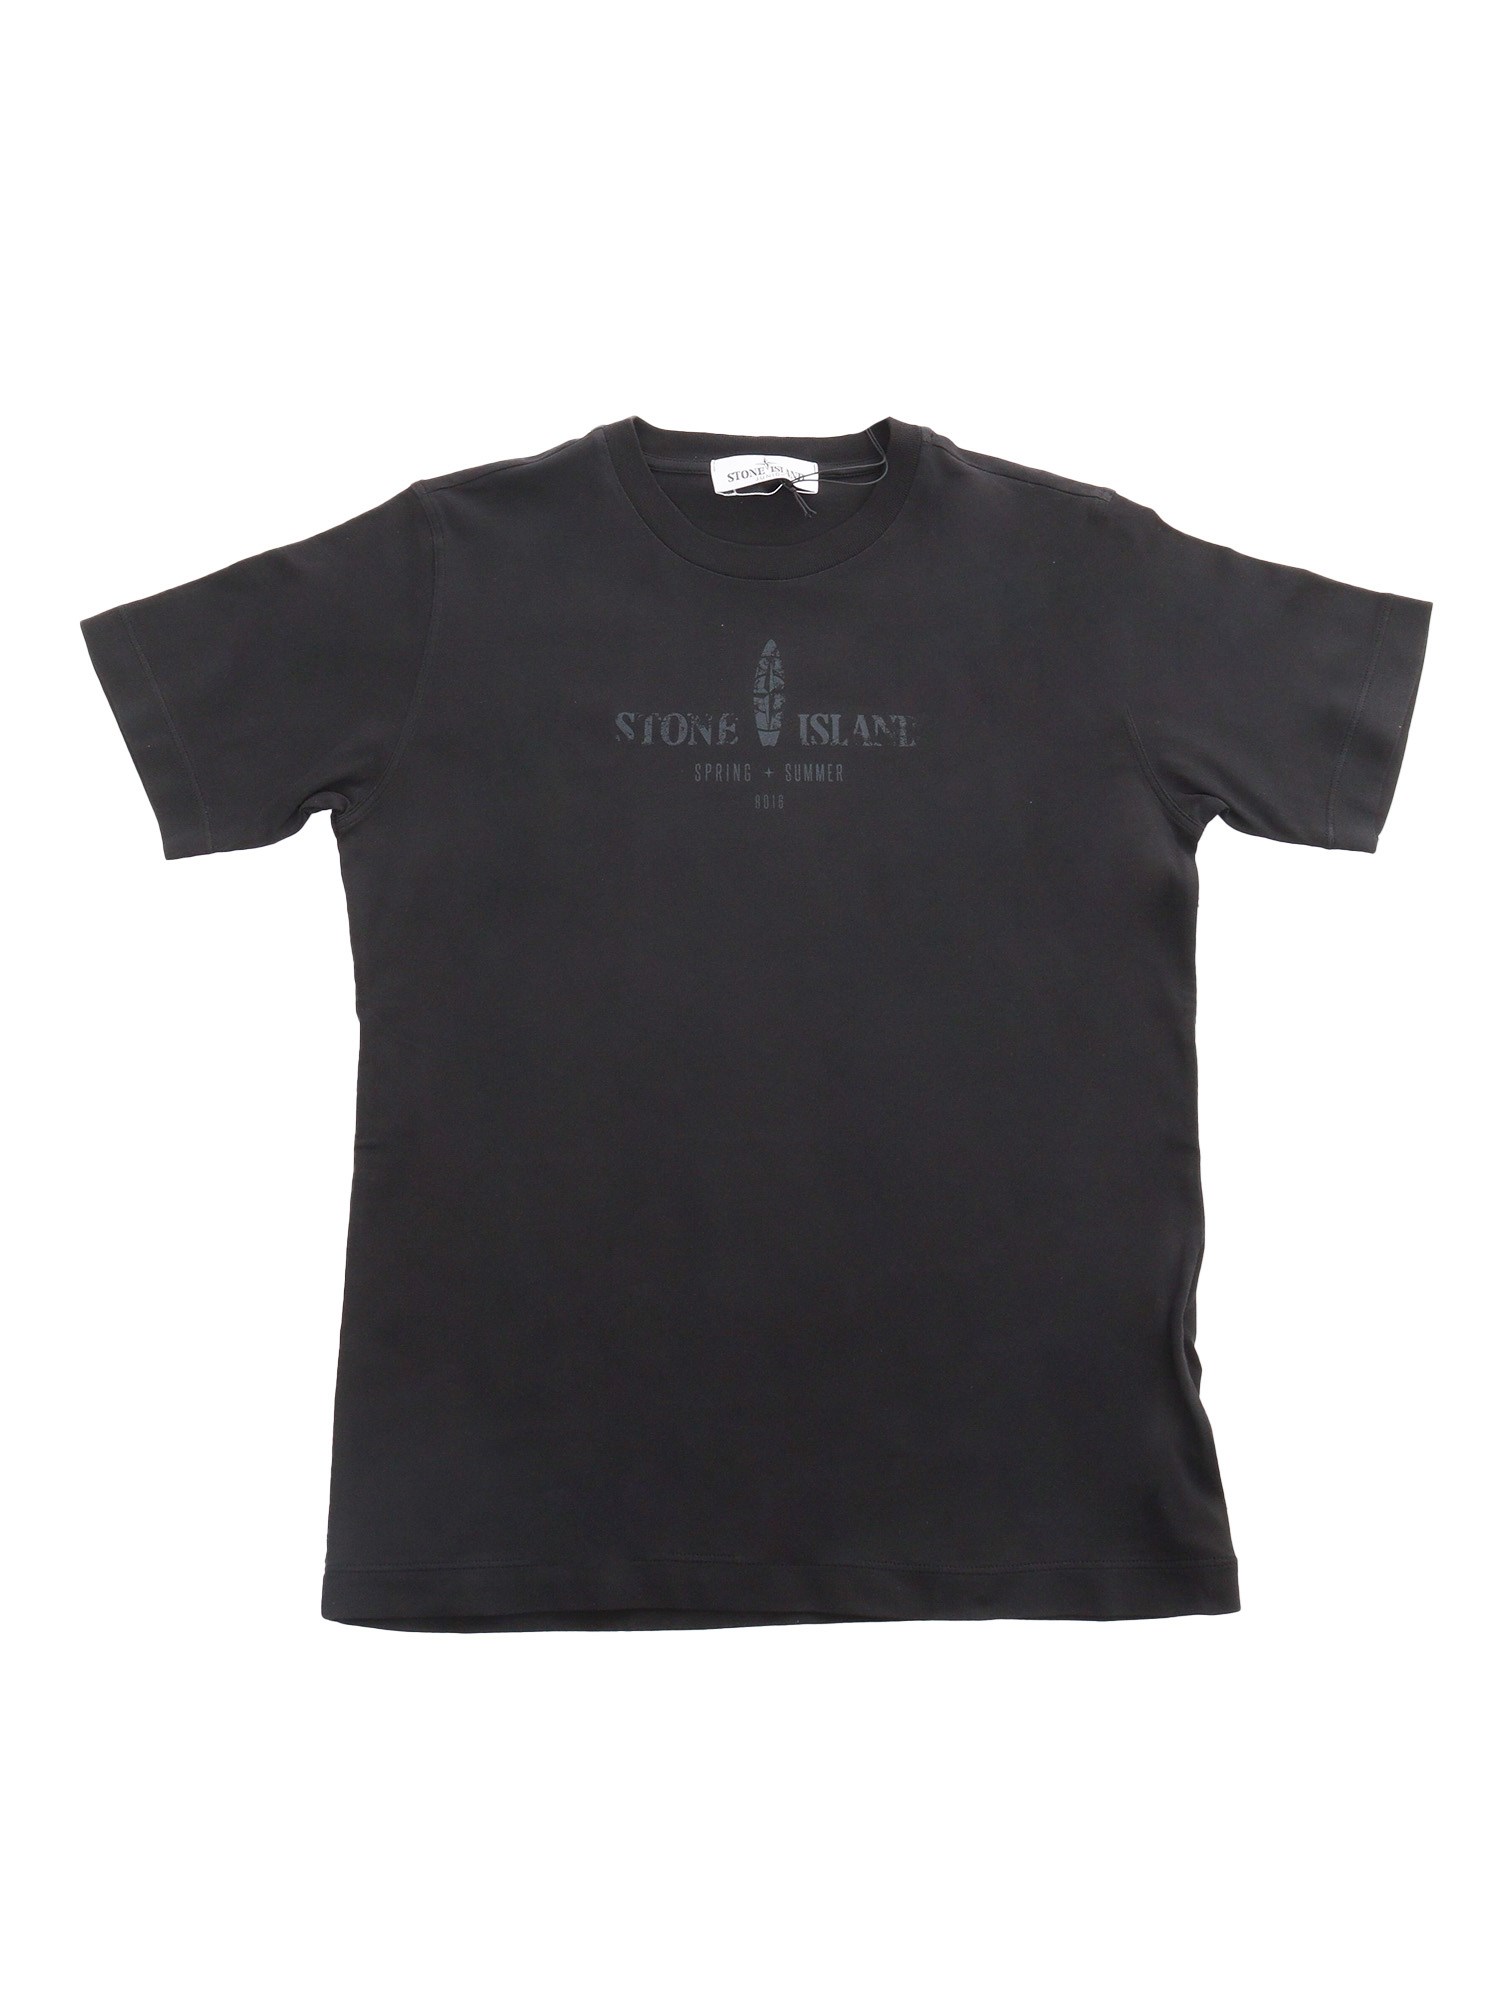 Stone Island Black T-shirt With Prints